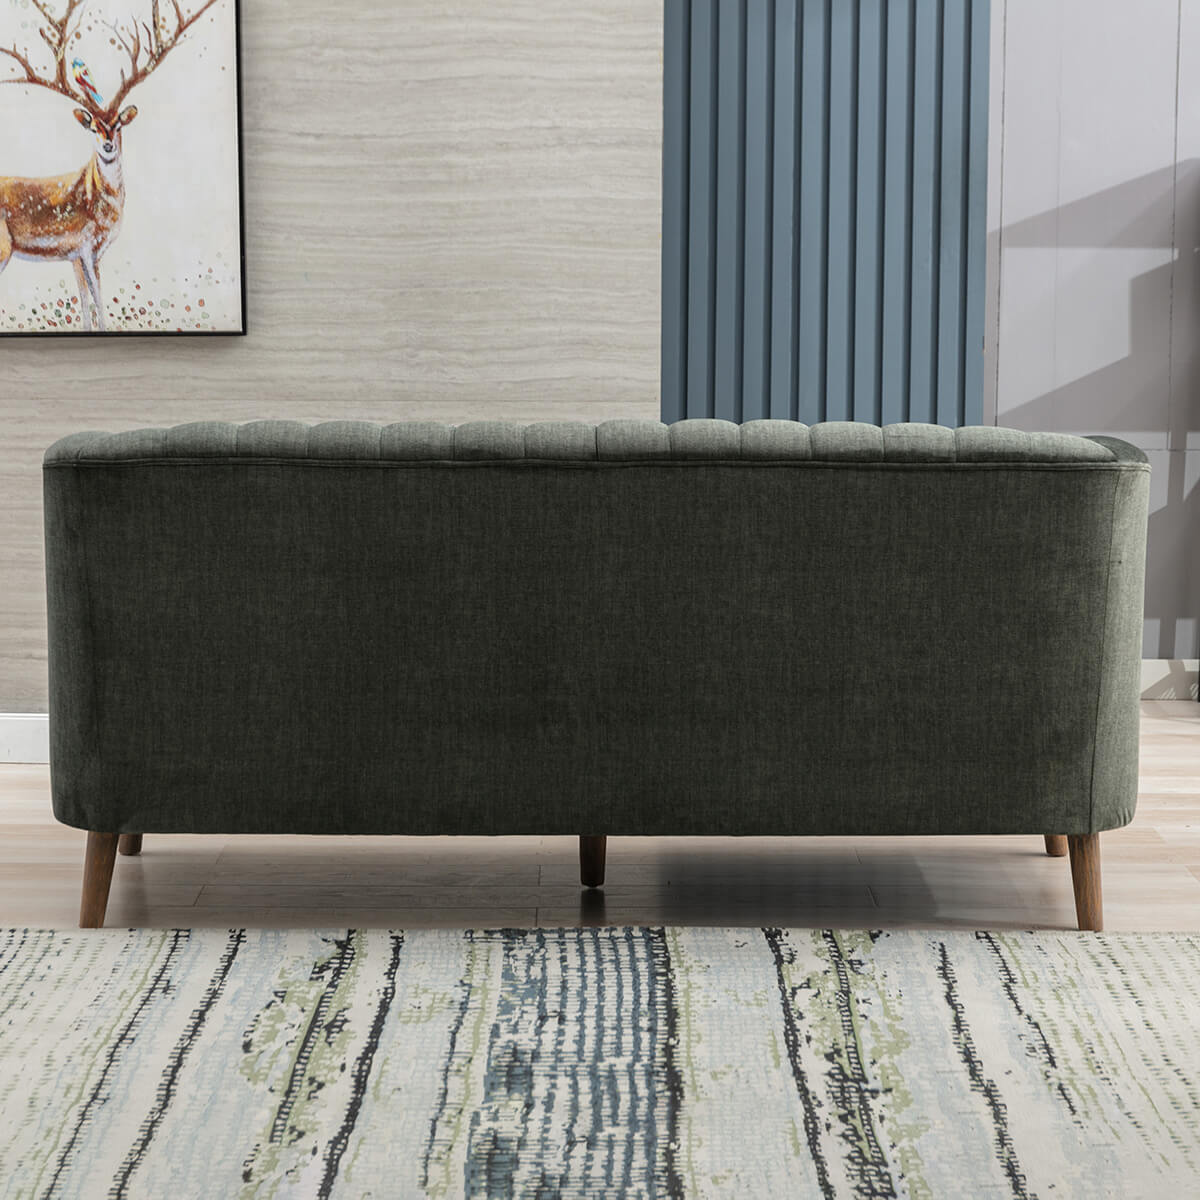 Charlotte 3 Seater Sofa – Moss Green